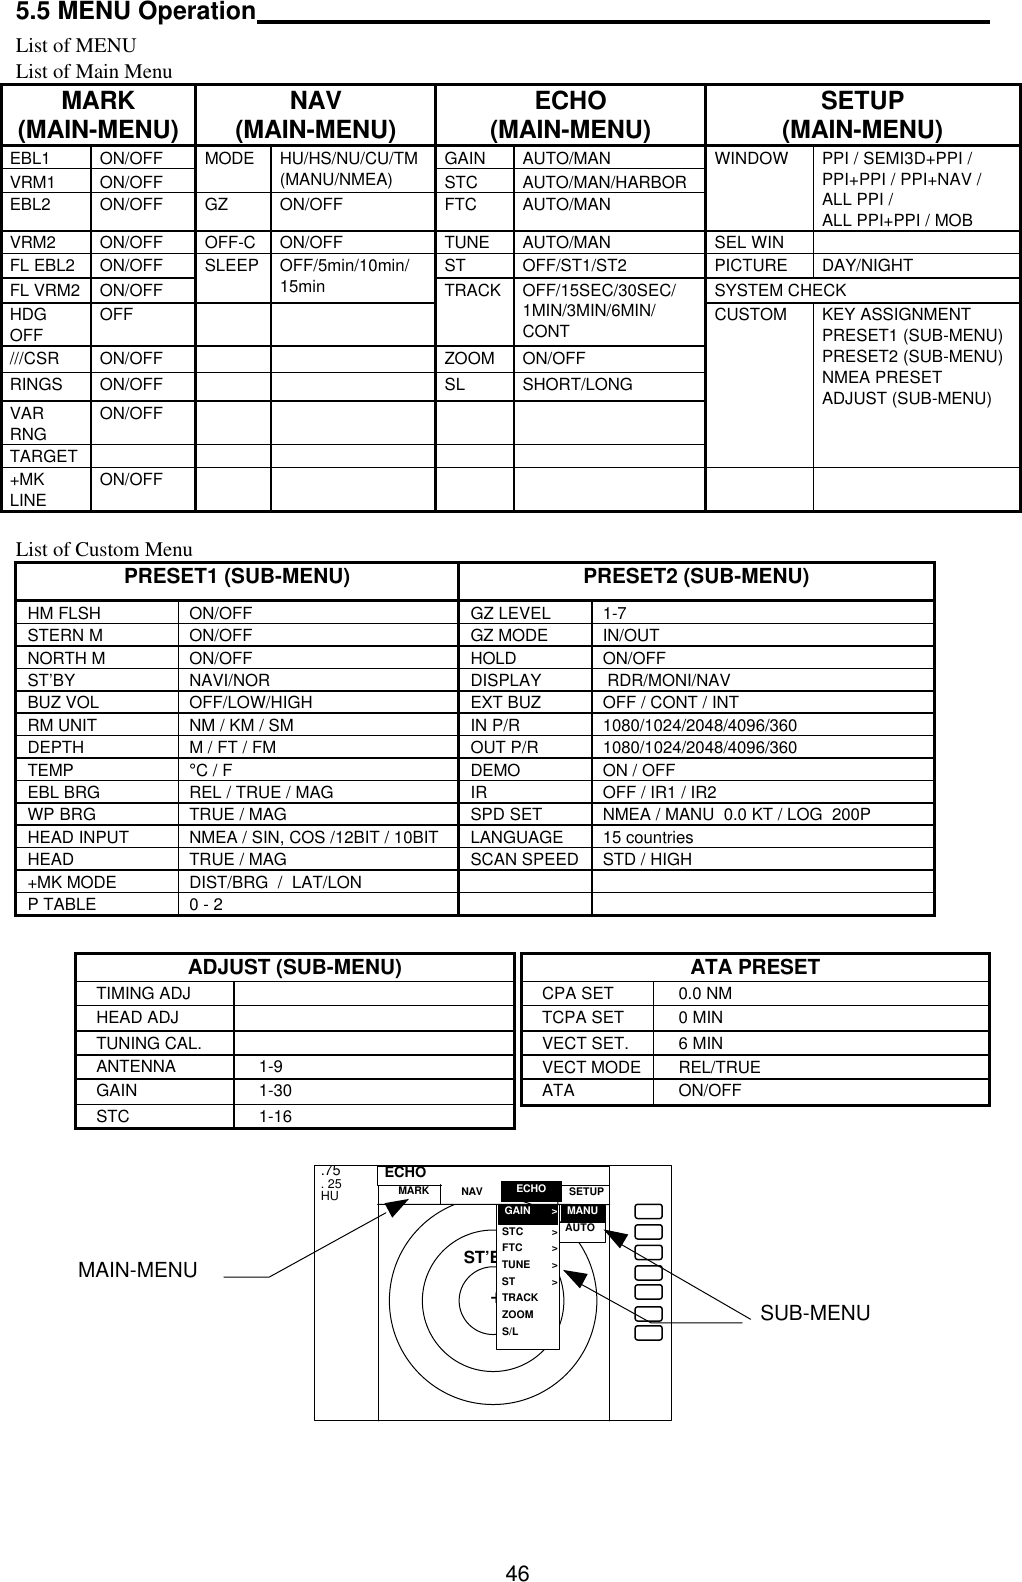  465.5 MENU Operation   List of MENU List of Main Menu MARK  (MAIN-MENU) NAV  (MAIN-MENU) ECHO  (MAIN-MENU) SETUP (MAIN-MENU) EBL1 ON/OFF GAIN AUTO/MAN VRM1 ON/OFF MODE HU/HS/NU/CU/TM (MANU/NMEA) STC AUTO/MAN/HARBOR EBL2 ON/OFF GZ ON/OFF FTC AUTO/MAN WINDOW PPI / SEMI3D+PPI / PPI+PPI / PPI+NAV / ALL PPI / ALL PPI+PPI / MOB VRM2 ON/OFF OFF-C ON/OFF TUNE AUTO/MAN SEL WIN   FL EBL2 ON/OFF ST OFF/ST1/ST2 PICTURE DAY/NIGHT FL VRM2 ON/OFF SLEEP OFF/5min/10min/ 15min SYSTEM CHECK HDG OFF OFF     TRACK OFF/15SEC/30SEC/ 1MIN/3MIN/6MIN/ CONT ///CSR ON/OFF      ZOOM ON/OFF RINGS ON/OFF      SL SHORT/LONG VAR RNG ON/OFF         TARGET          CUSTOM KEY ASSIGNMENT PRESET1 (SUB-MENU) PRESET2 (SUB-MENU) NMEA PRESET ADJUST (SUB-MENU) +MK LINE ON/OFF              List of Custom Menu PRESET1 (SUB-MENU) PRESET2 (SUB-MENU) HM FLSH ON/OFF GZ LEVEL 1-7 STERN M ON/OFF GZ MODE IN/OUT NORTH M ON/OFF HOLD ON/OFF ST’BY NAVI/NOR DISPLAY RDR/MONI/NAV BUZ VOL OFF/LOW/HIGH EXT BUZ  OFF / CONT / INT RM UNIT NM / KM / SM IN P/R 1080/1024/2048/4096/360 DEPTH M / FT / FM OUT P/R 1080/1024/2048/4096/360 TEMP °C / F DEMO ON / OFF EBL BRG REL / TRUE / MAG IR OFF / IR1 / IR2 WP BRG TRUE / MAG SPD SET NMEA / MANU  0.0 KT / LOG  200P HEAD INPUT NMEA / SIN, COS /12BIT / 10BIT LANGUAGE 15 countries HEAD TRUE / MAG SCAN SPEED STD / HIGH +MK MODE DIST/BRG  /  LAT/LON     P TABLE 0 - 2                               ADJUST (SUB-MENU) TIMING ADJ   HEAD ADJ   TUNING CAL.   ANTENNA 1-9 GAIN 1-30 STC 1-16 ATA PRESET CPA SET 0.0 NM TCPA SET 0 MIN VECT SET. 6 MIN VECT MODE REL/TRUE ATA ON/OFF + ST’BY .75 . 25 HU  STC &gt;  FTC &gt;  TUNE &gt;  ST &gt;  TRACK  ZOOM  S/L MARK NAV ECHO SETUP ECHO GAIN       &gt; MANU AUTO MAIN-MENU SUB-MENU 